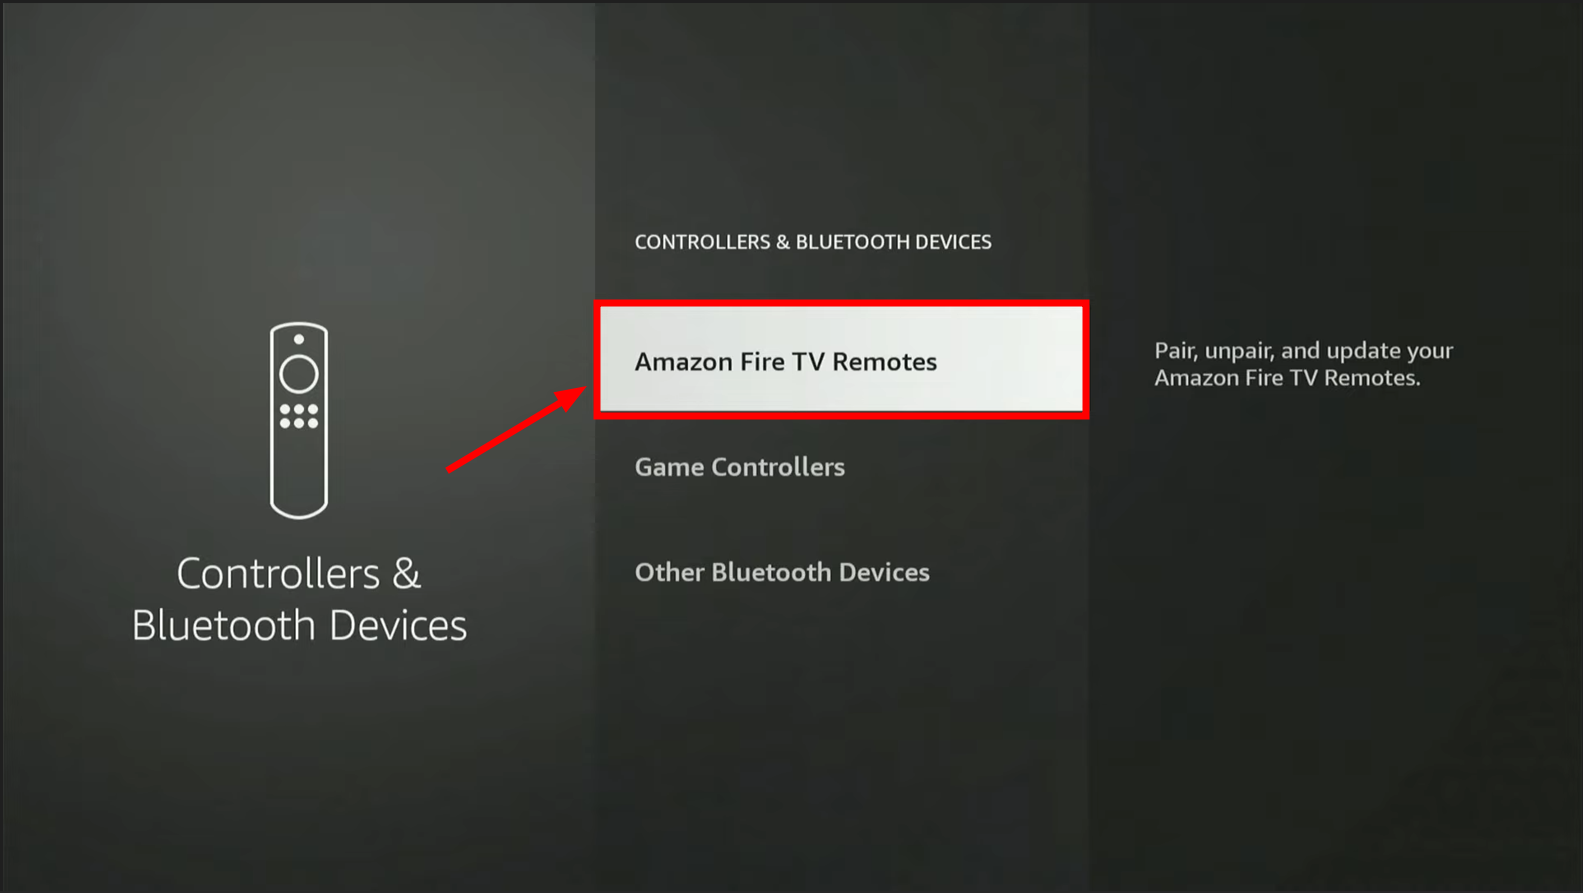 Select Amazon Fire TV Remotes